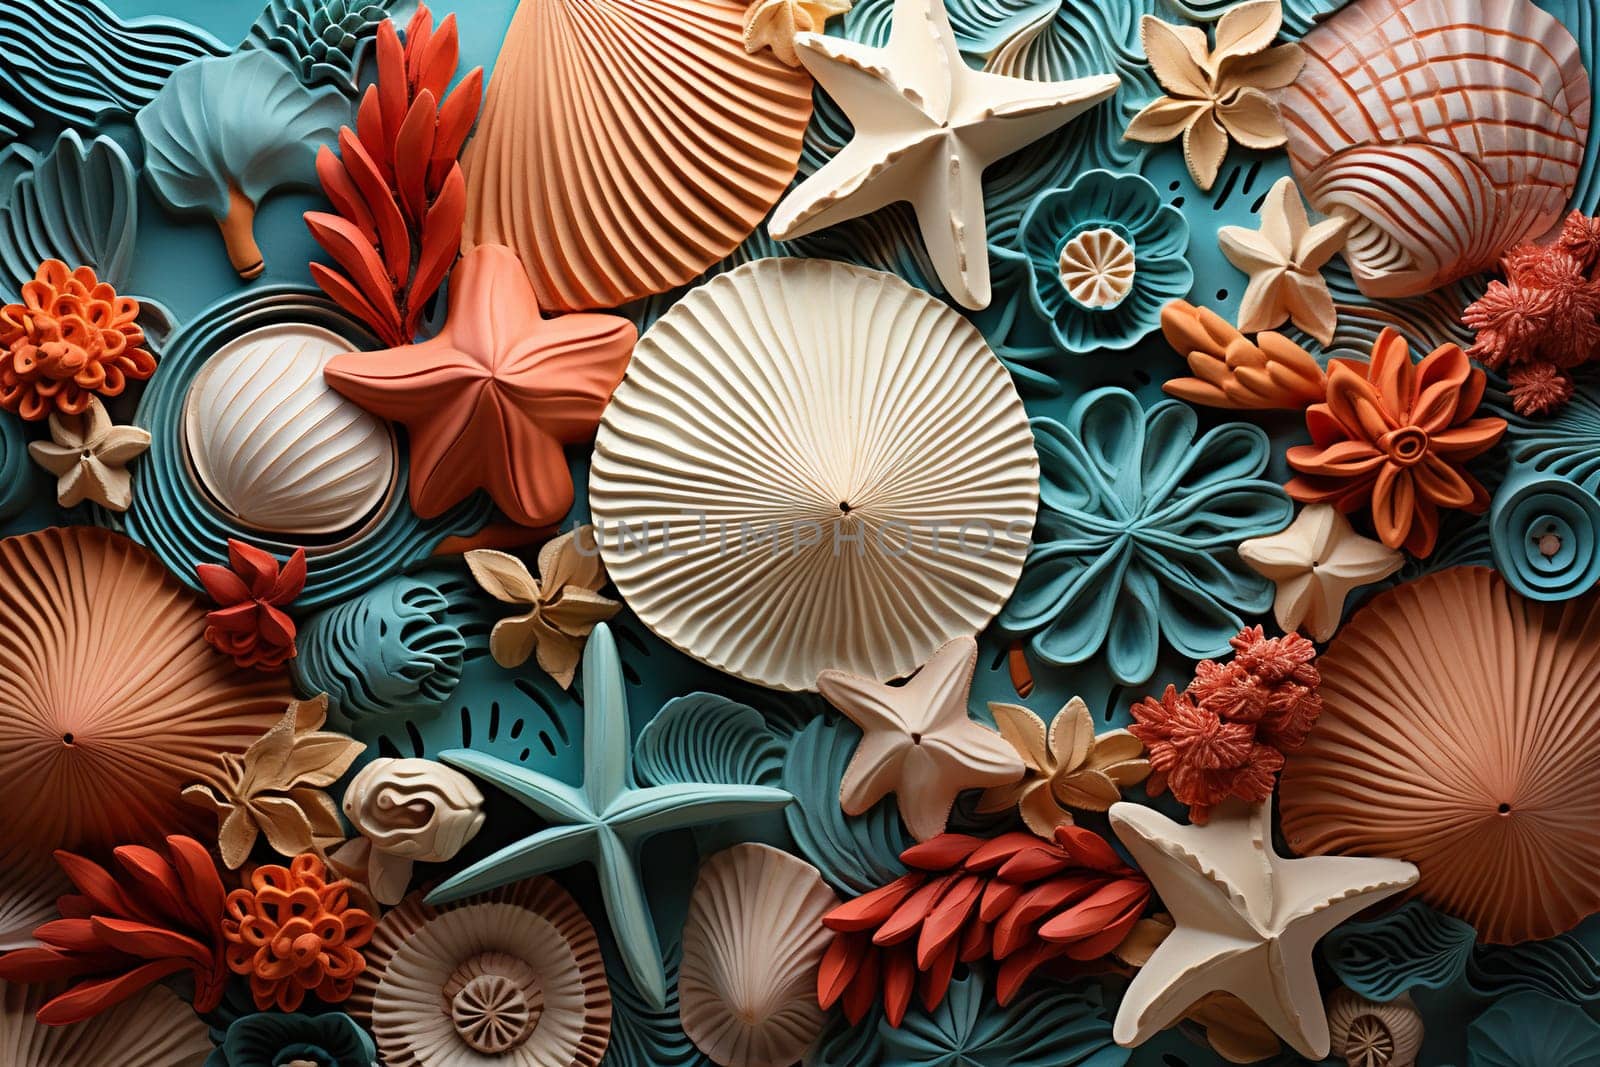 Seabed with starfish, shells, tubefish. Marine decorative set. Underwater ecosystem, aquatic natural creatures.